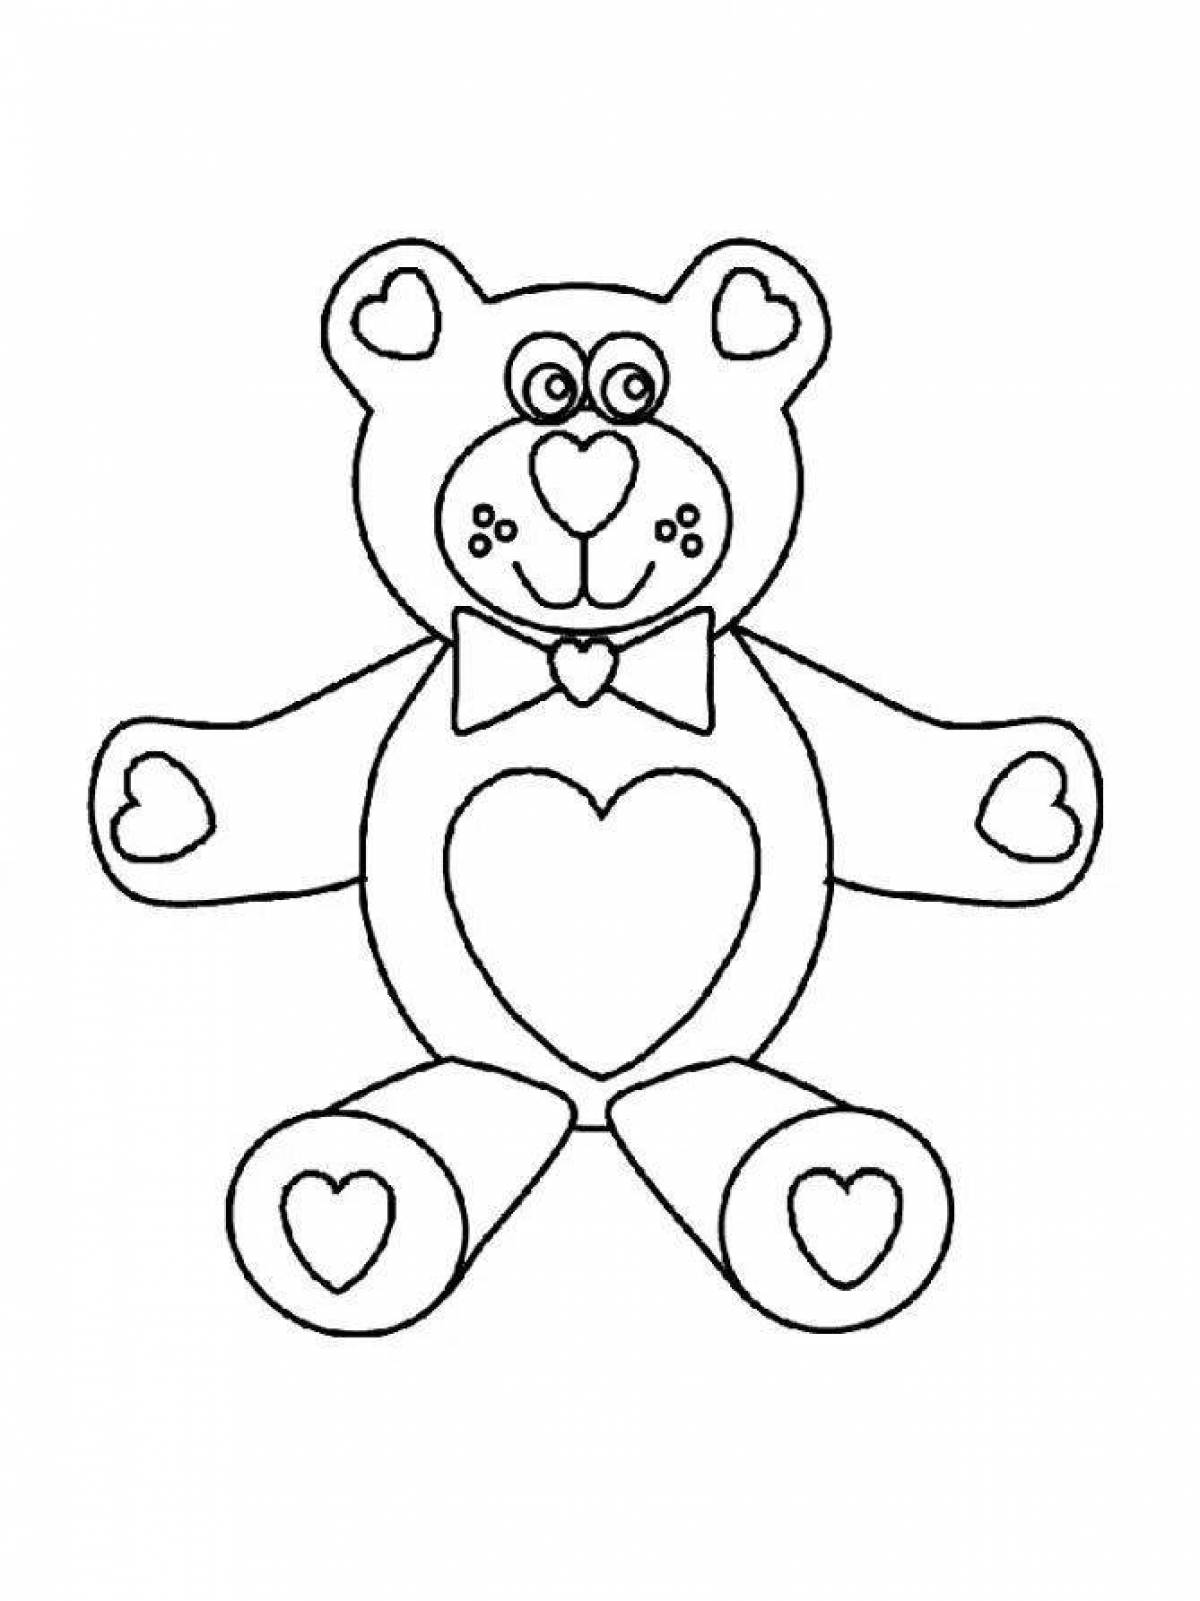 Coloring funny teddy bear valery